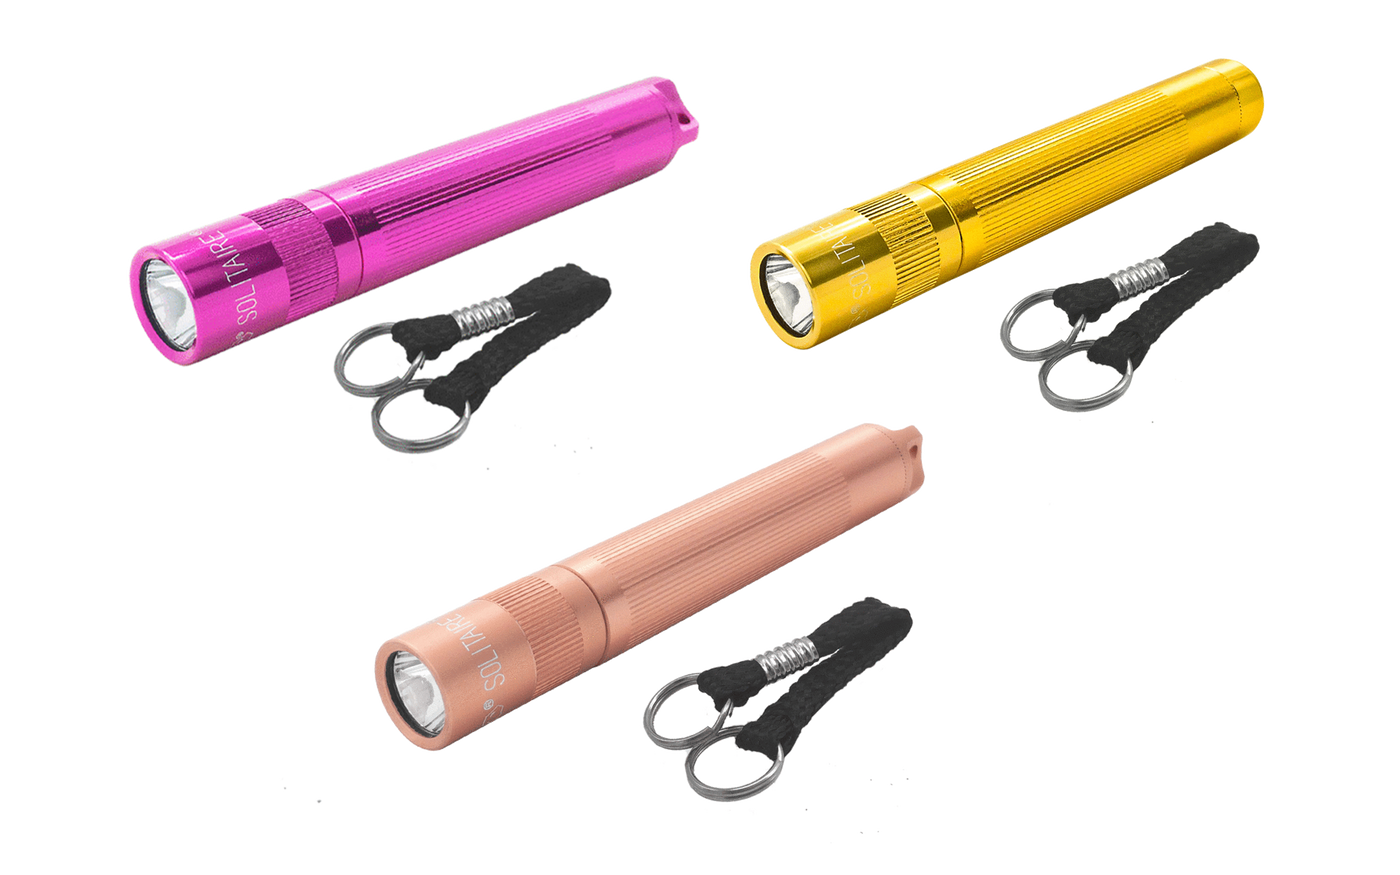 Maglite Solitaire LED pocket flashlight